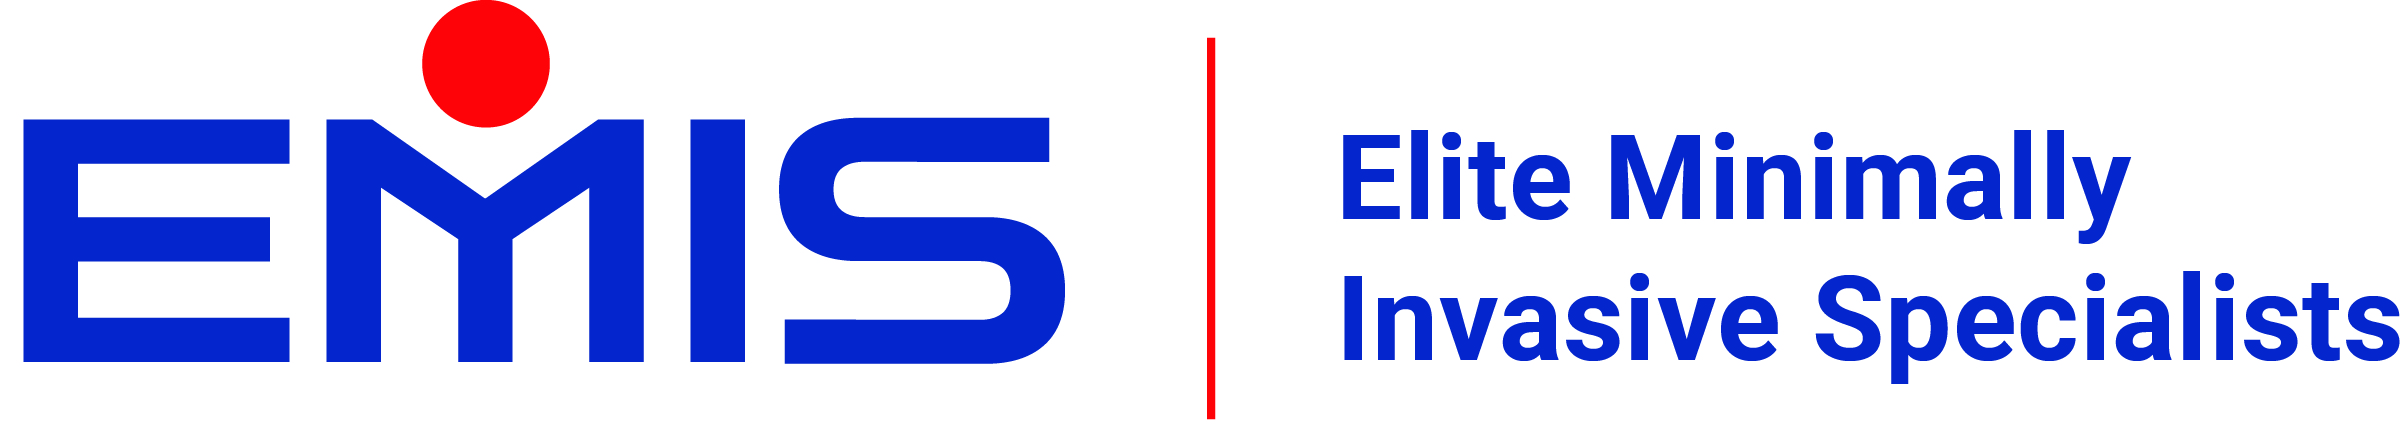 emis logo with description Emis Health Minimally Invasive Vascular Specialists Dallas Texas Arlington